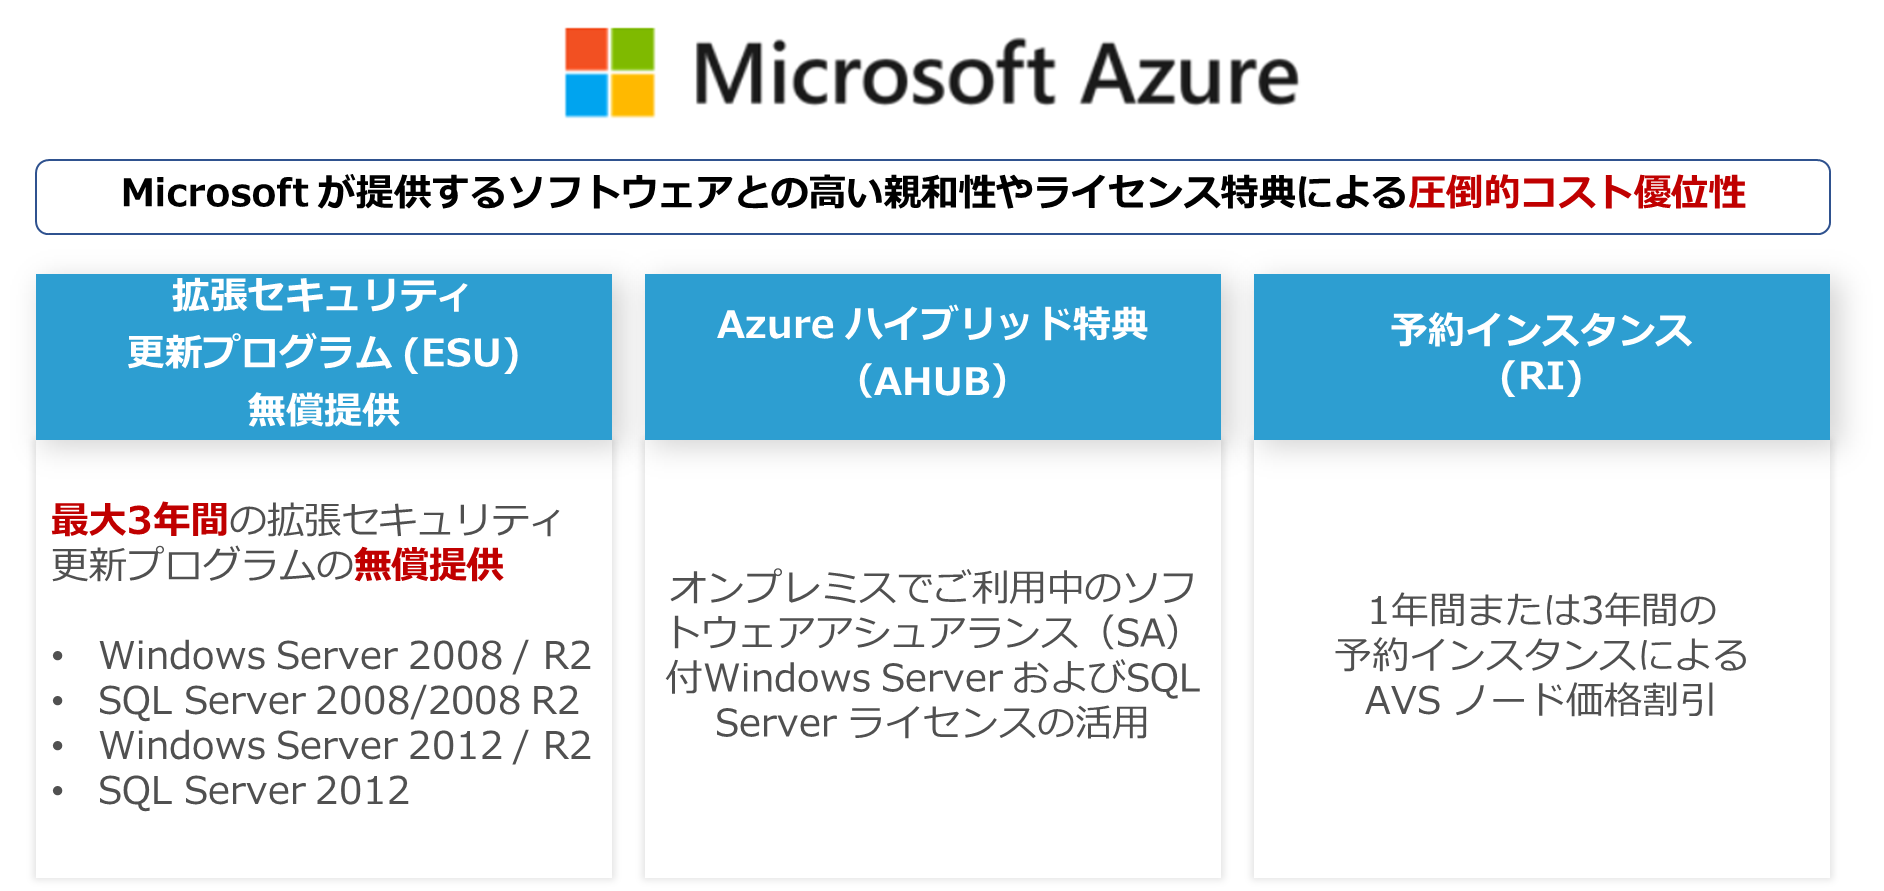 Azure VMware Solution 価格